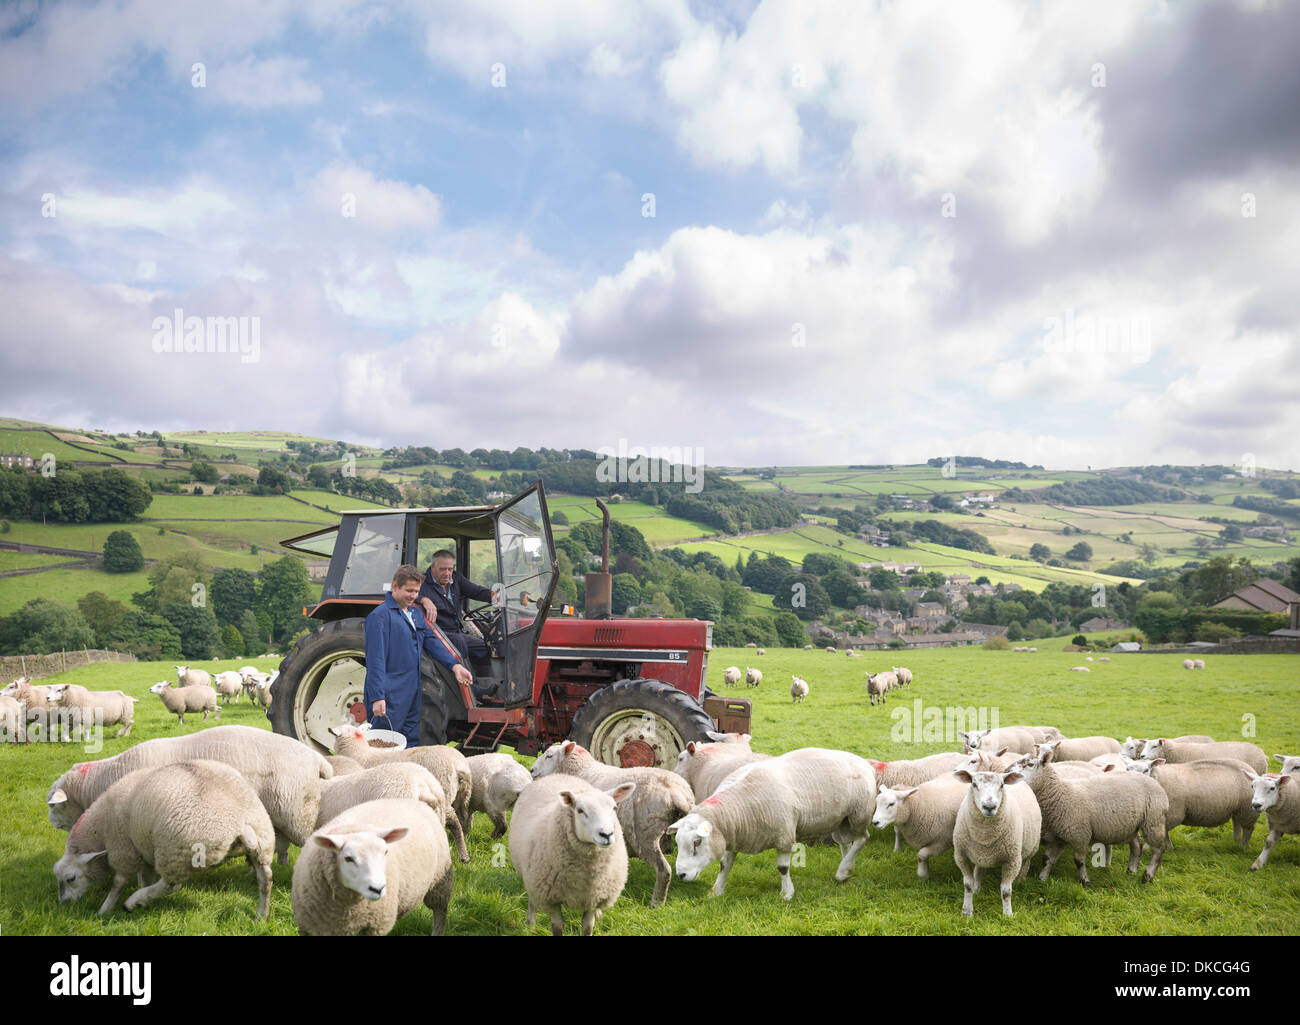 Landwirt in Traktor mit Sohn gerade Schafe im Feld Stockfoto